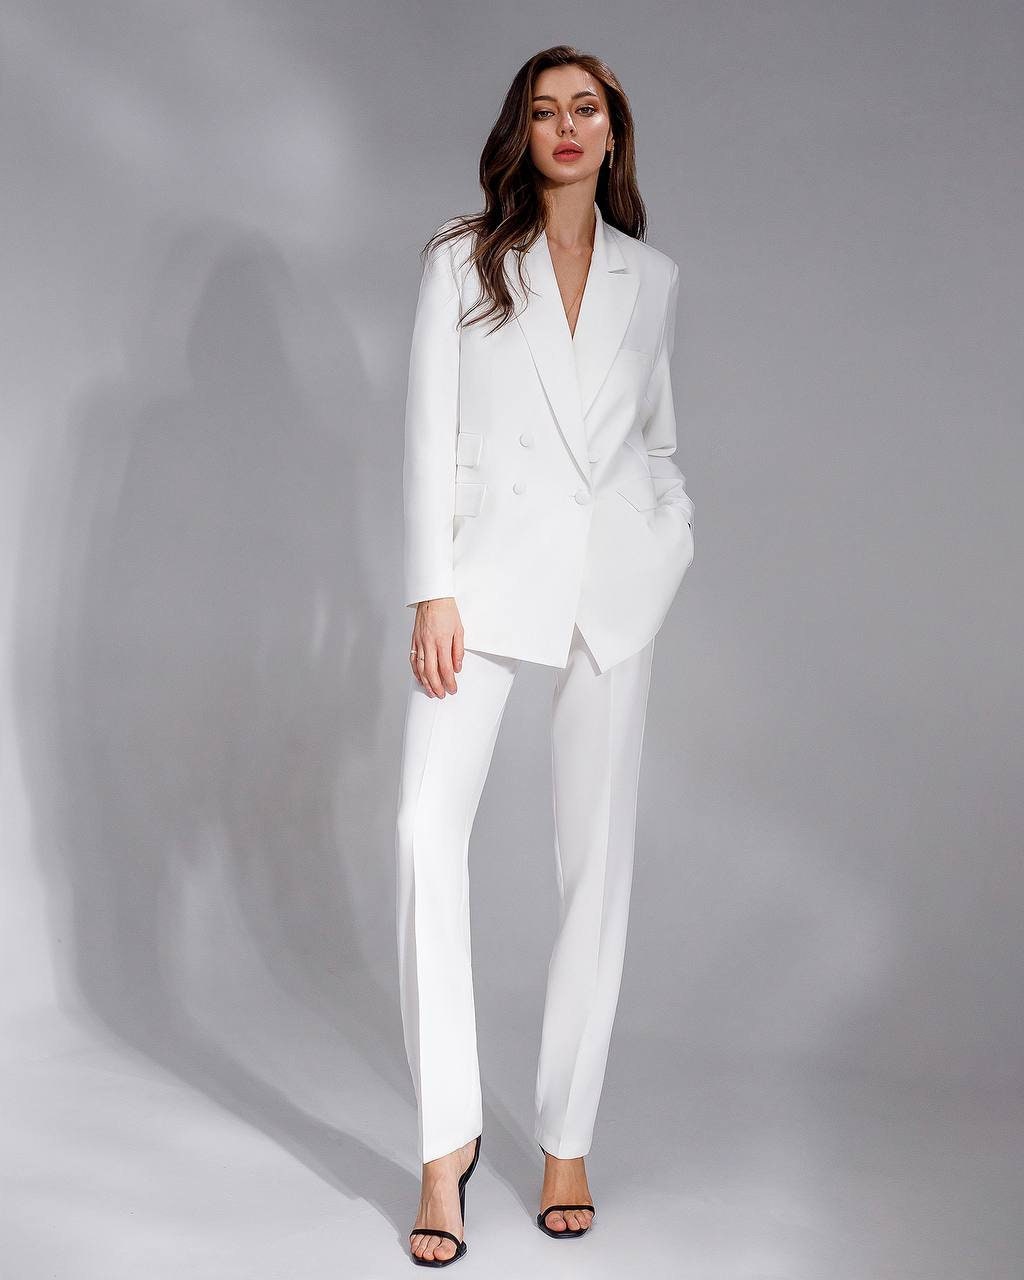 White Wedding Suit, Formal White Suit for Women, Wide Leg Pants